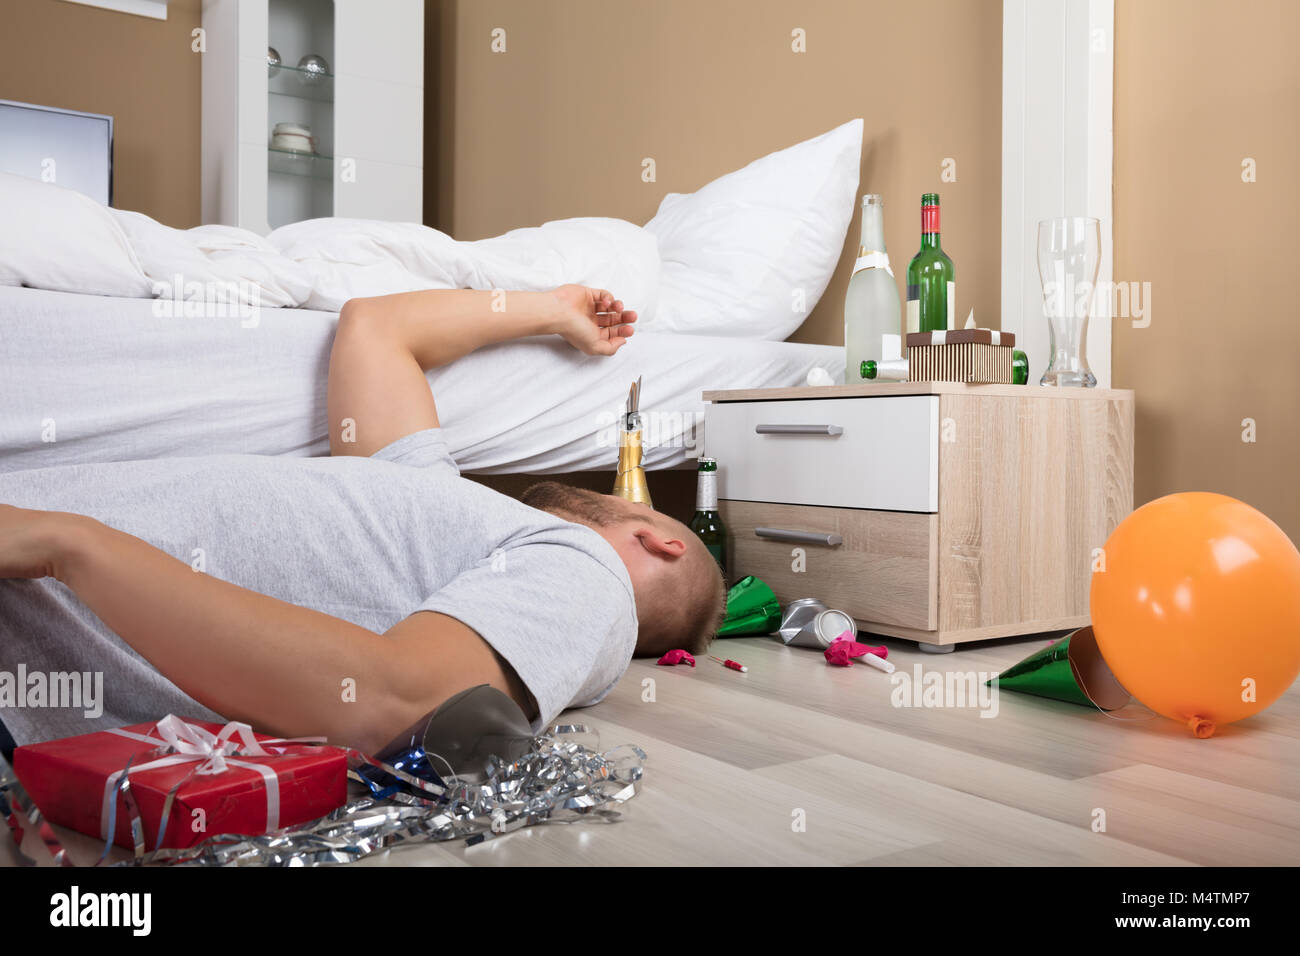 Man Sleeping On Messed Up Hardwood Floor With Beer Bottles On Nightstand Stock Photo